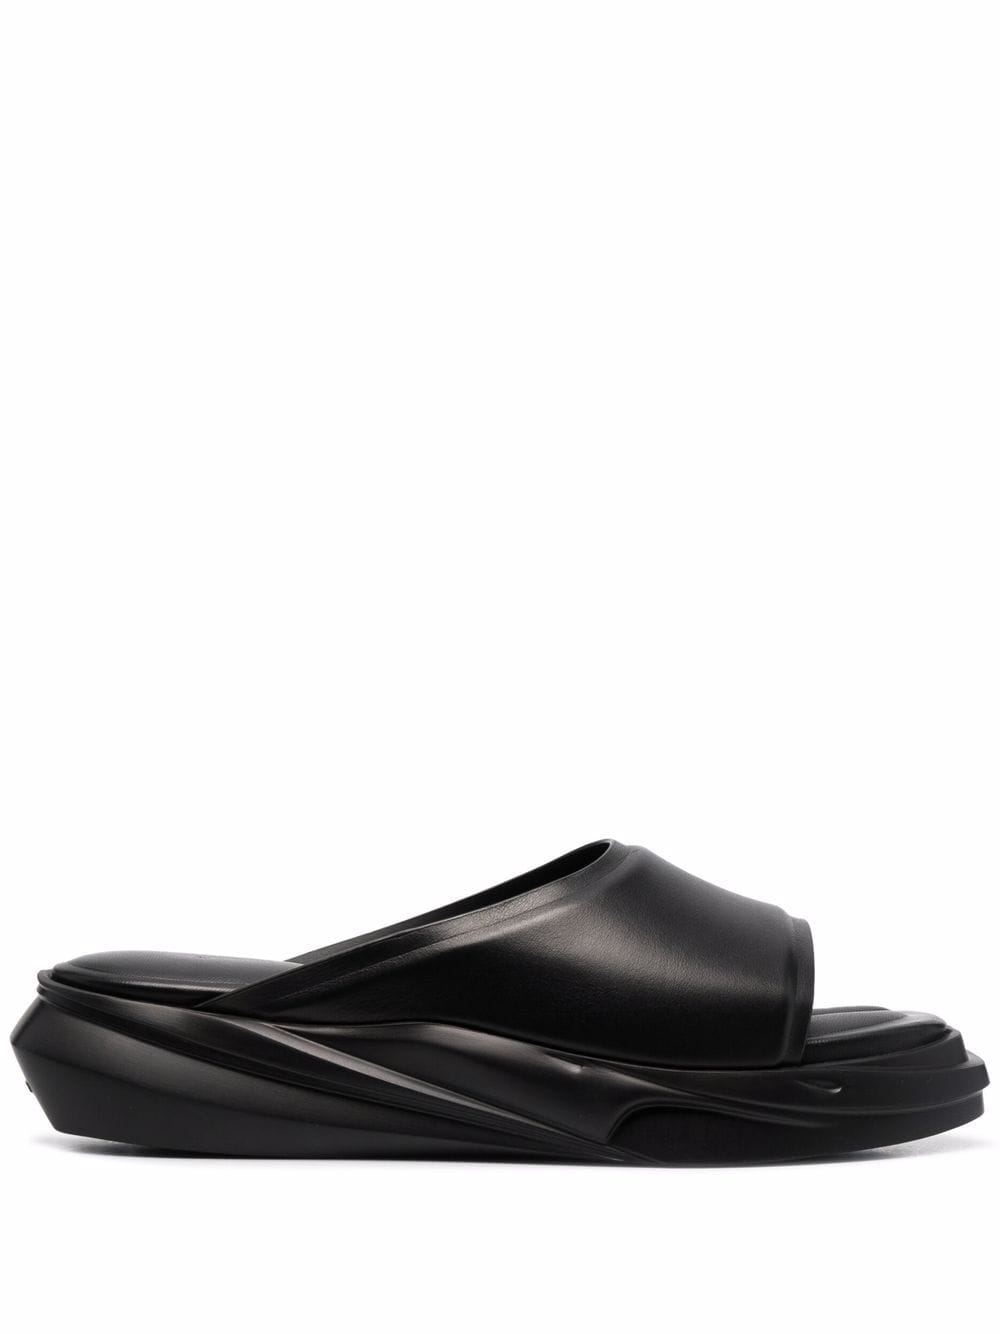 Black leather chunky slide sandals